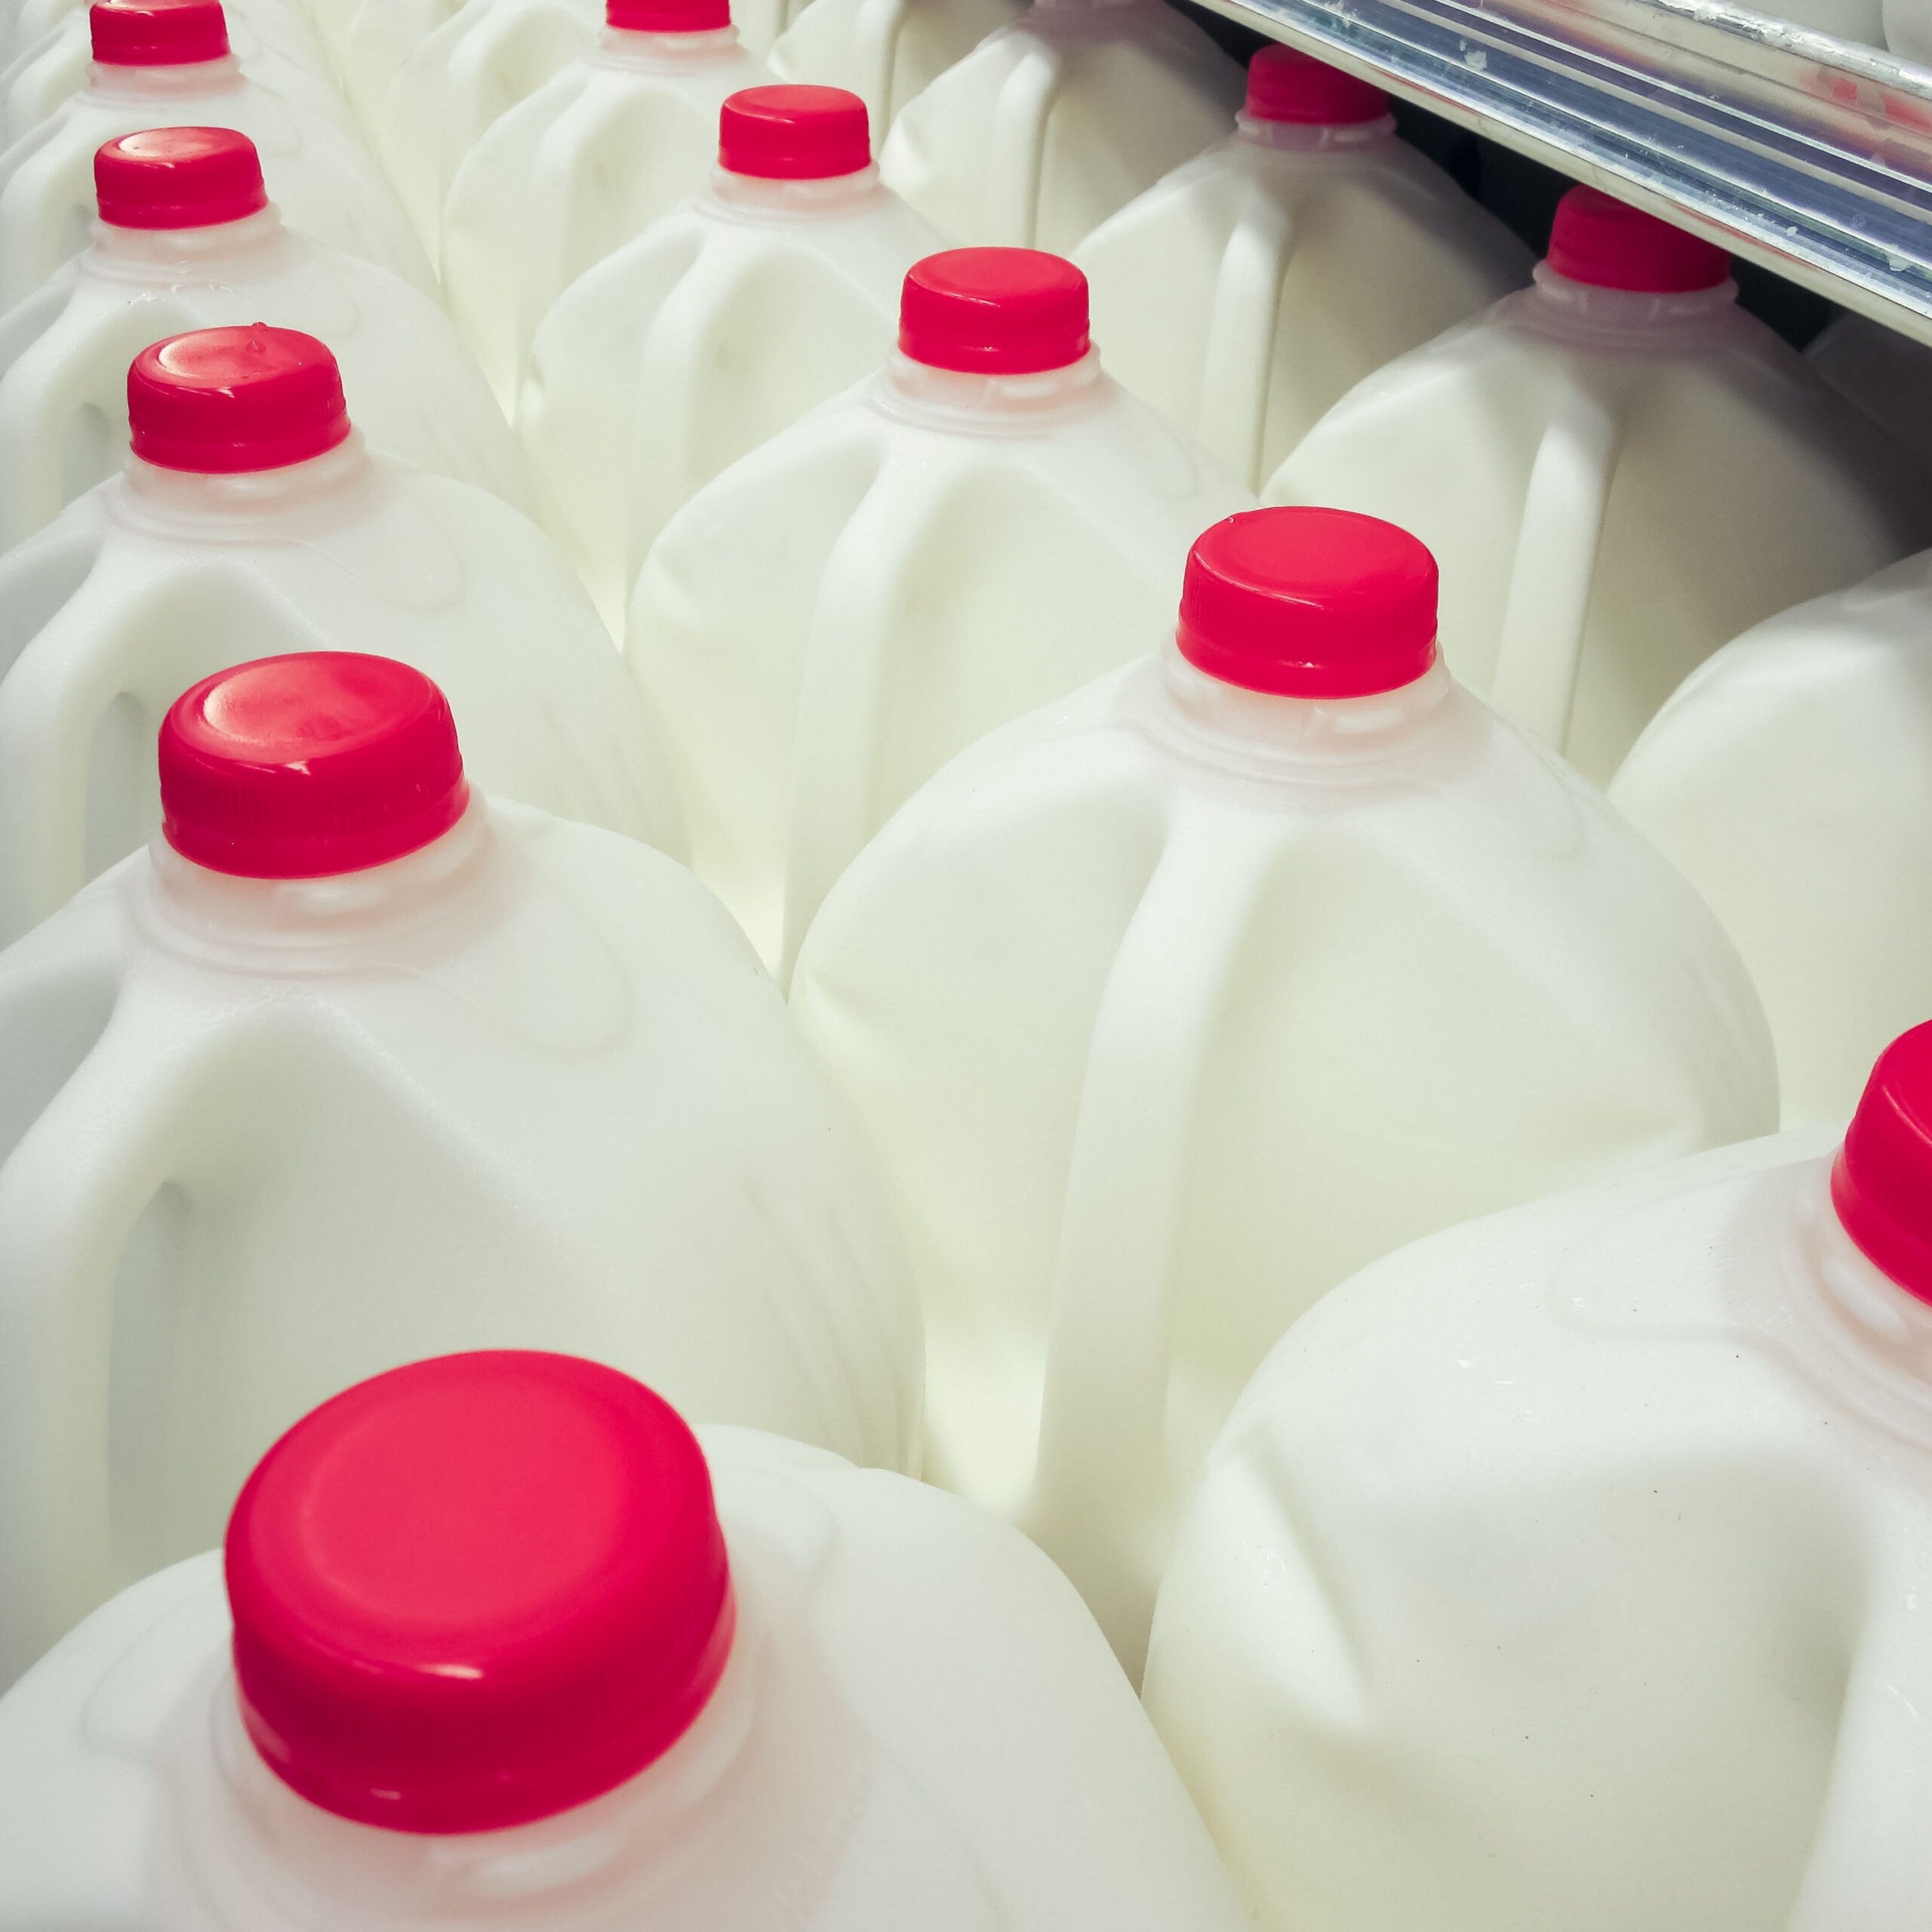 jugs of whole milk in store